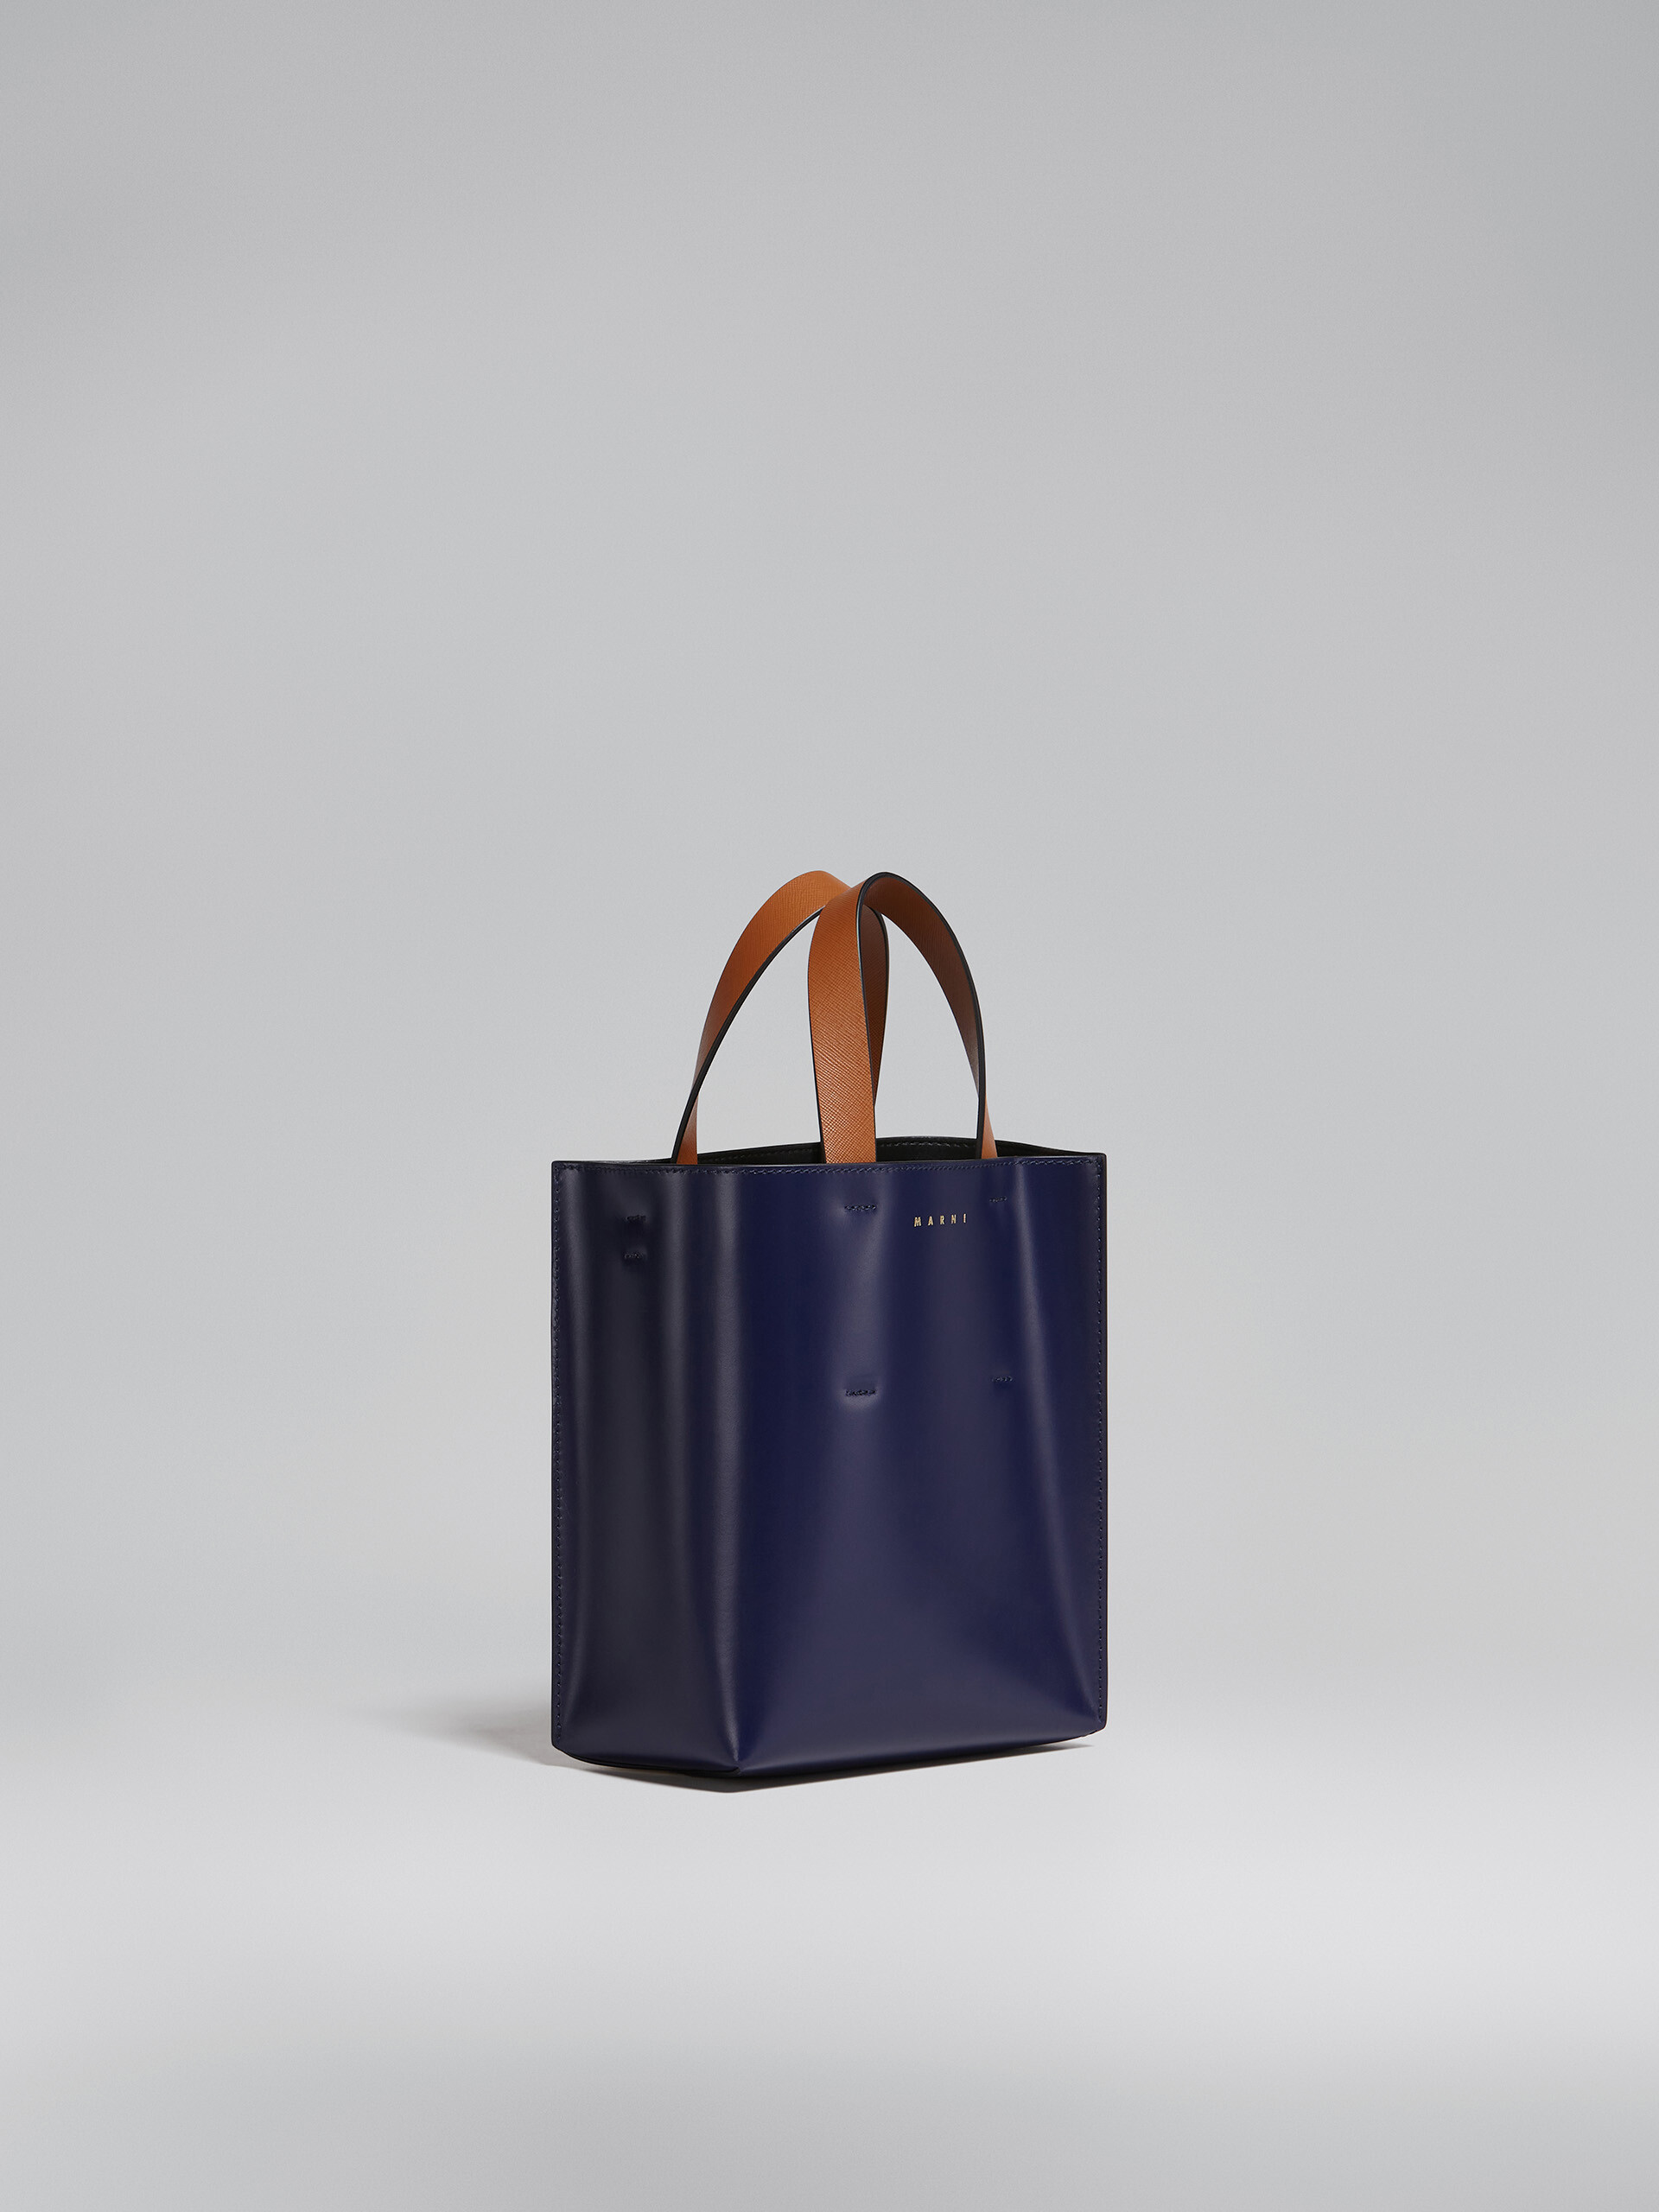 MUSEO bag mini in pelle blu e bianca - Borse shopping - Image 6